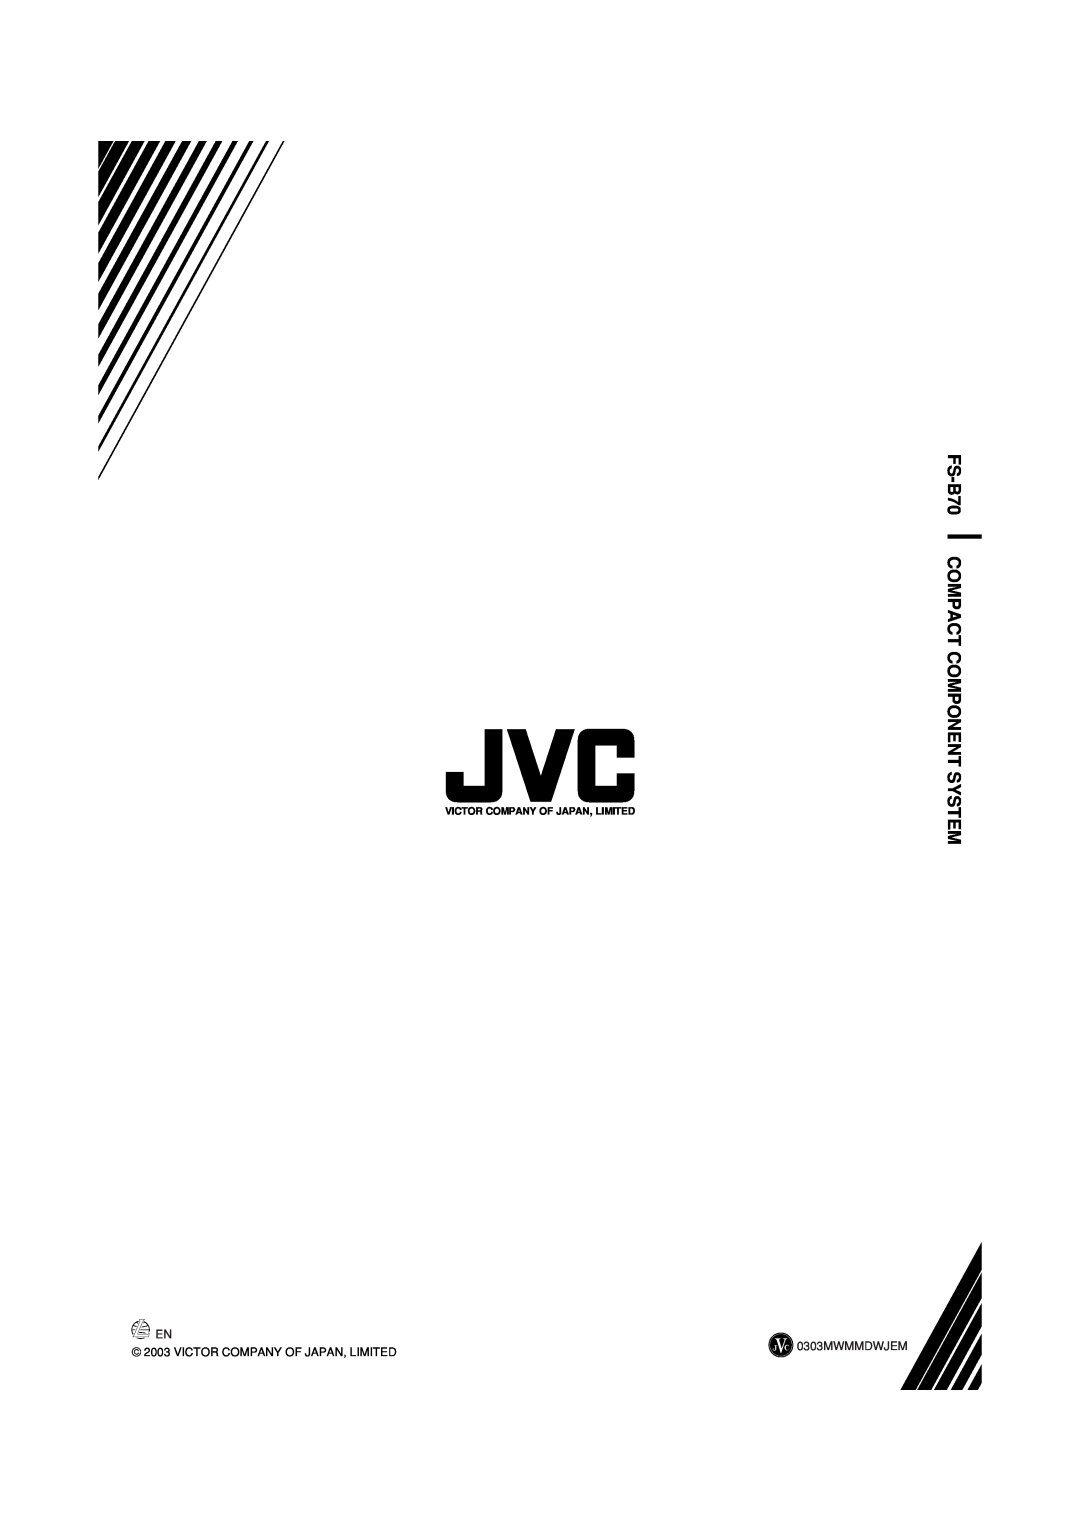 JVC CA-FSB70 manual FS-B70COMPACT COMPONENT SYSTEM, Victor Company Of Japan, Limited, 0303MWMMDWJEM 